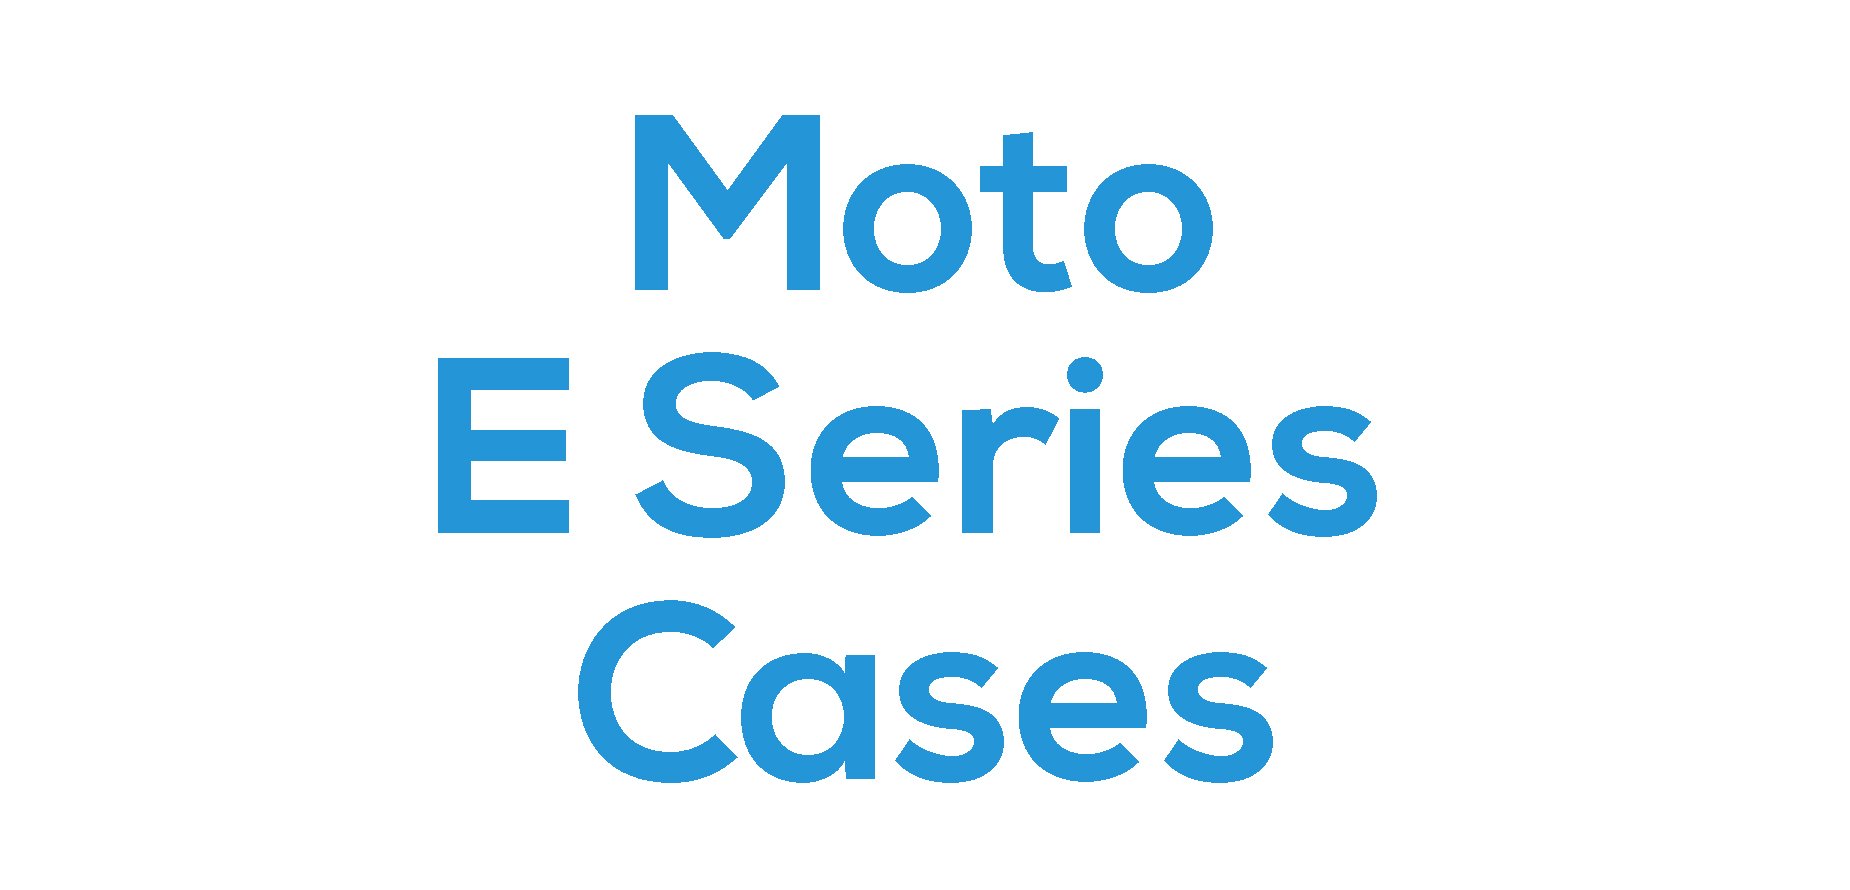 Moto E Series Cases